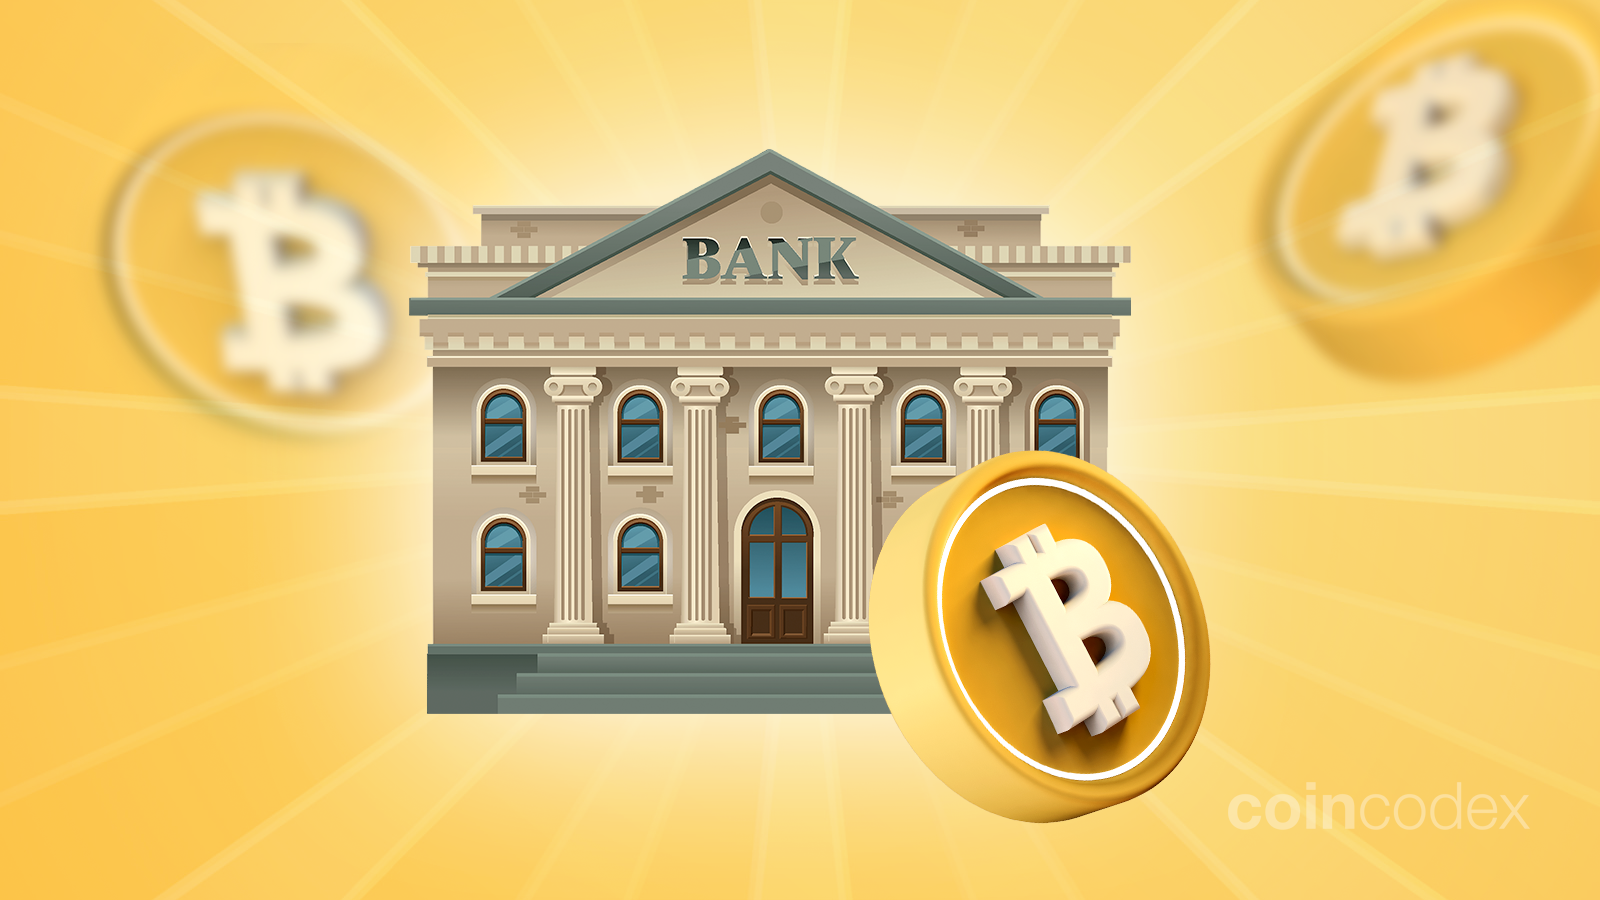 Crypto-Friendly Digital Bank | The Kingdom Bank